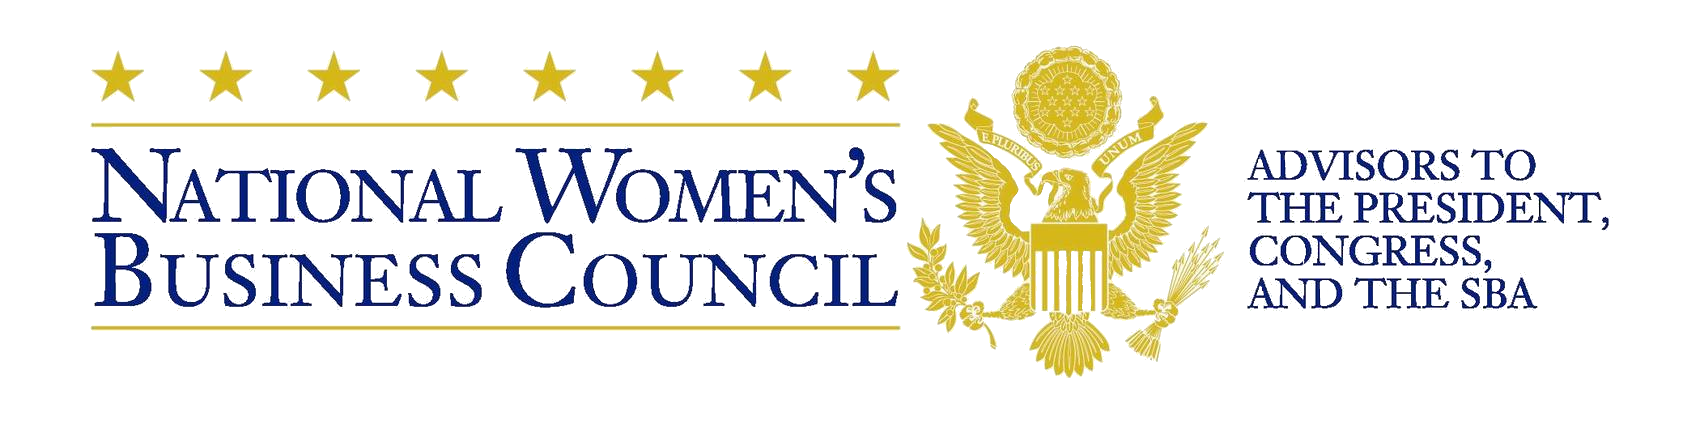 National Women’s Business Council Logo